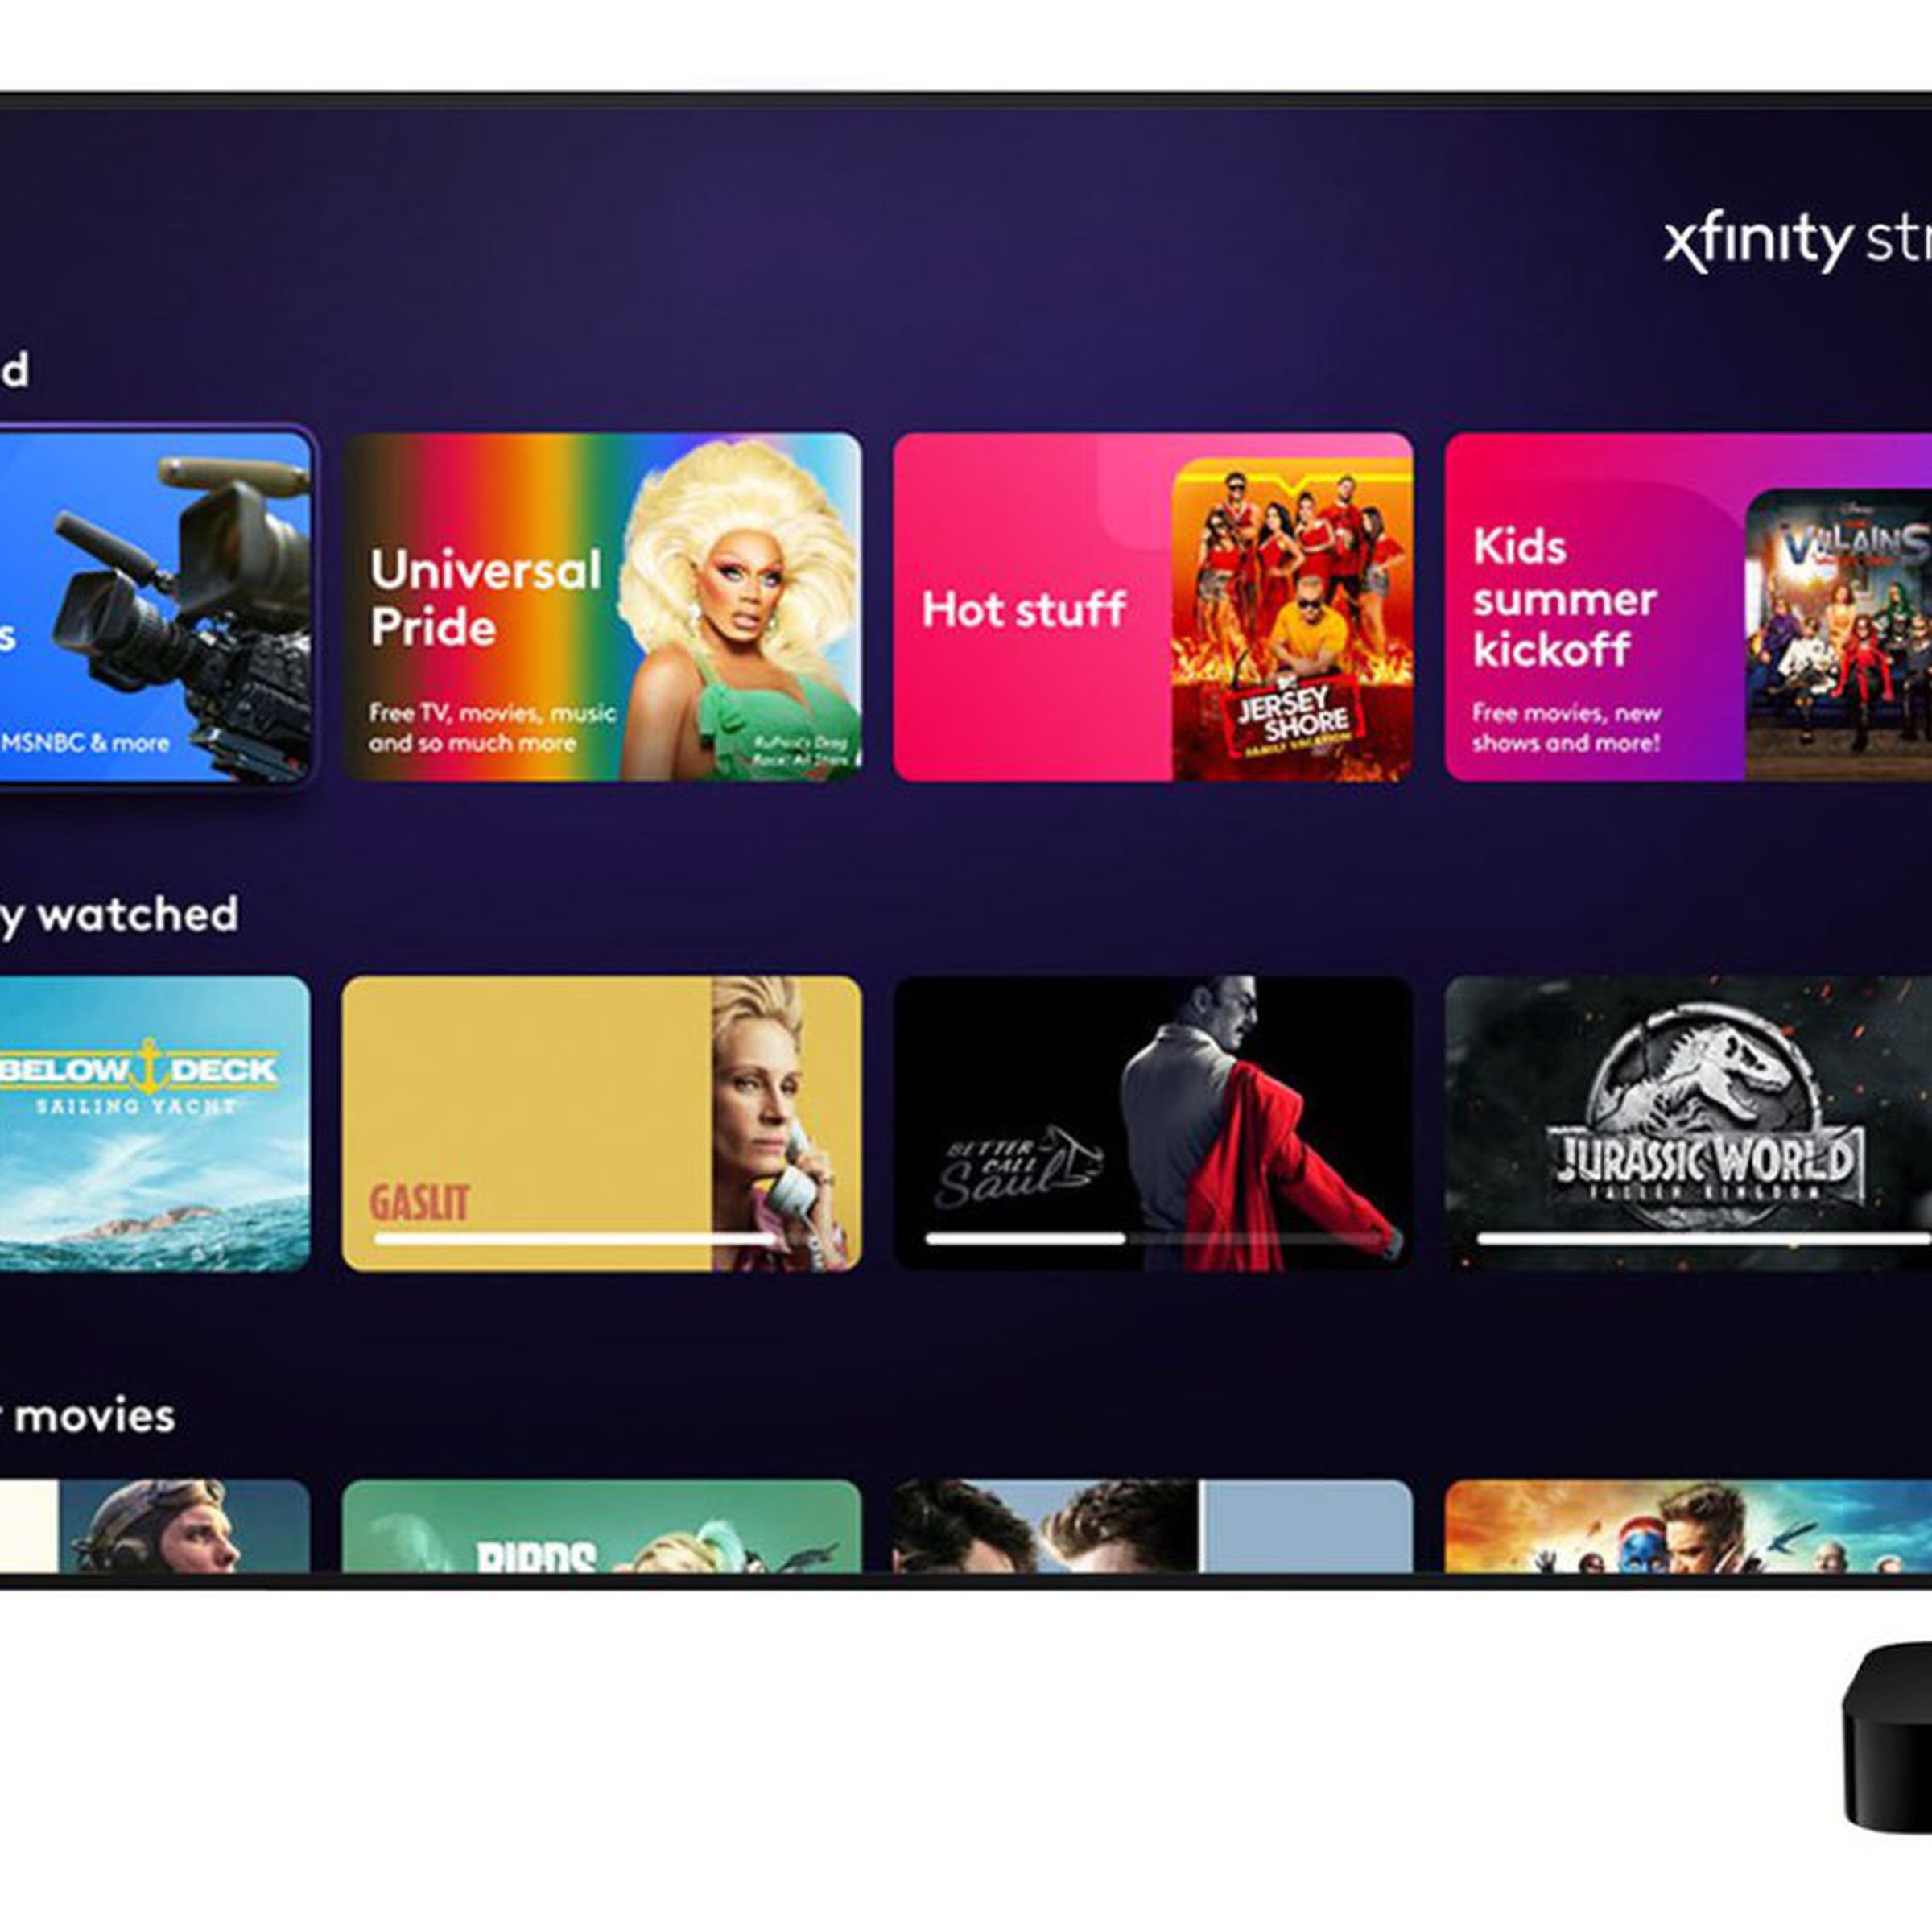 Comcast Xfinity Stream app on Apple TV